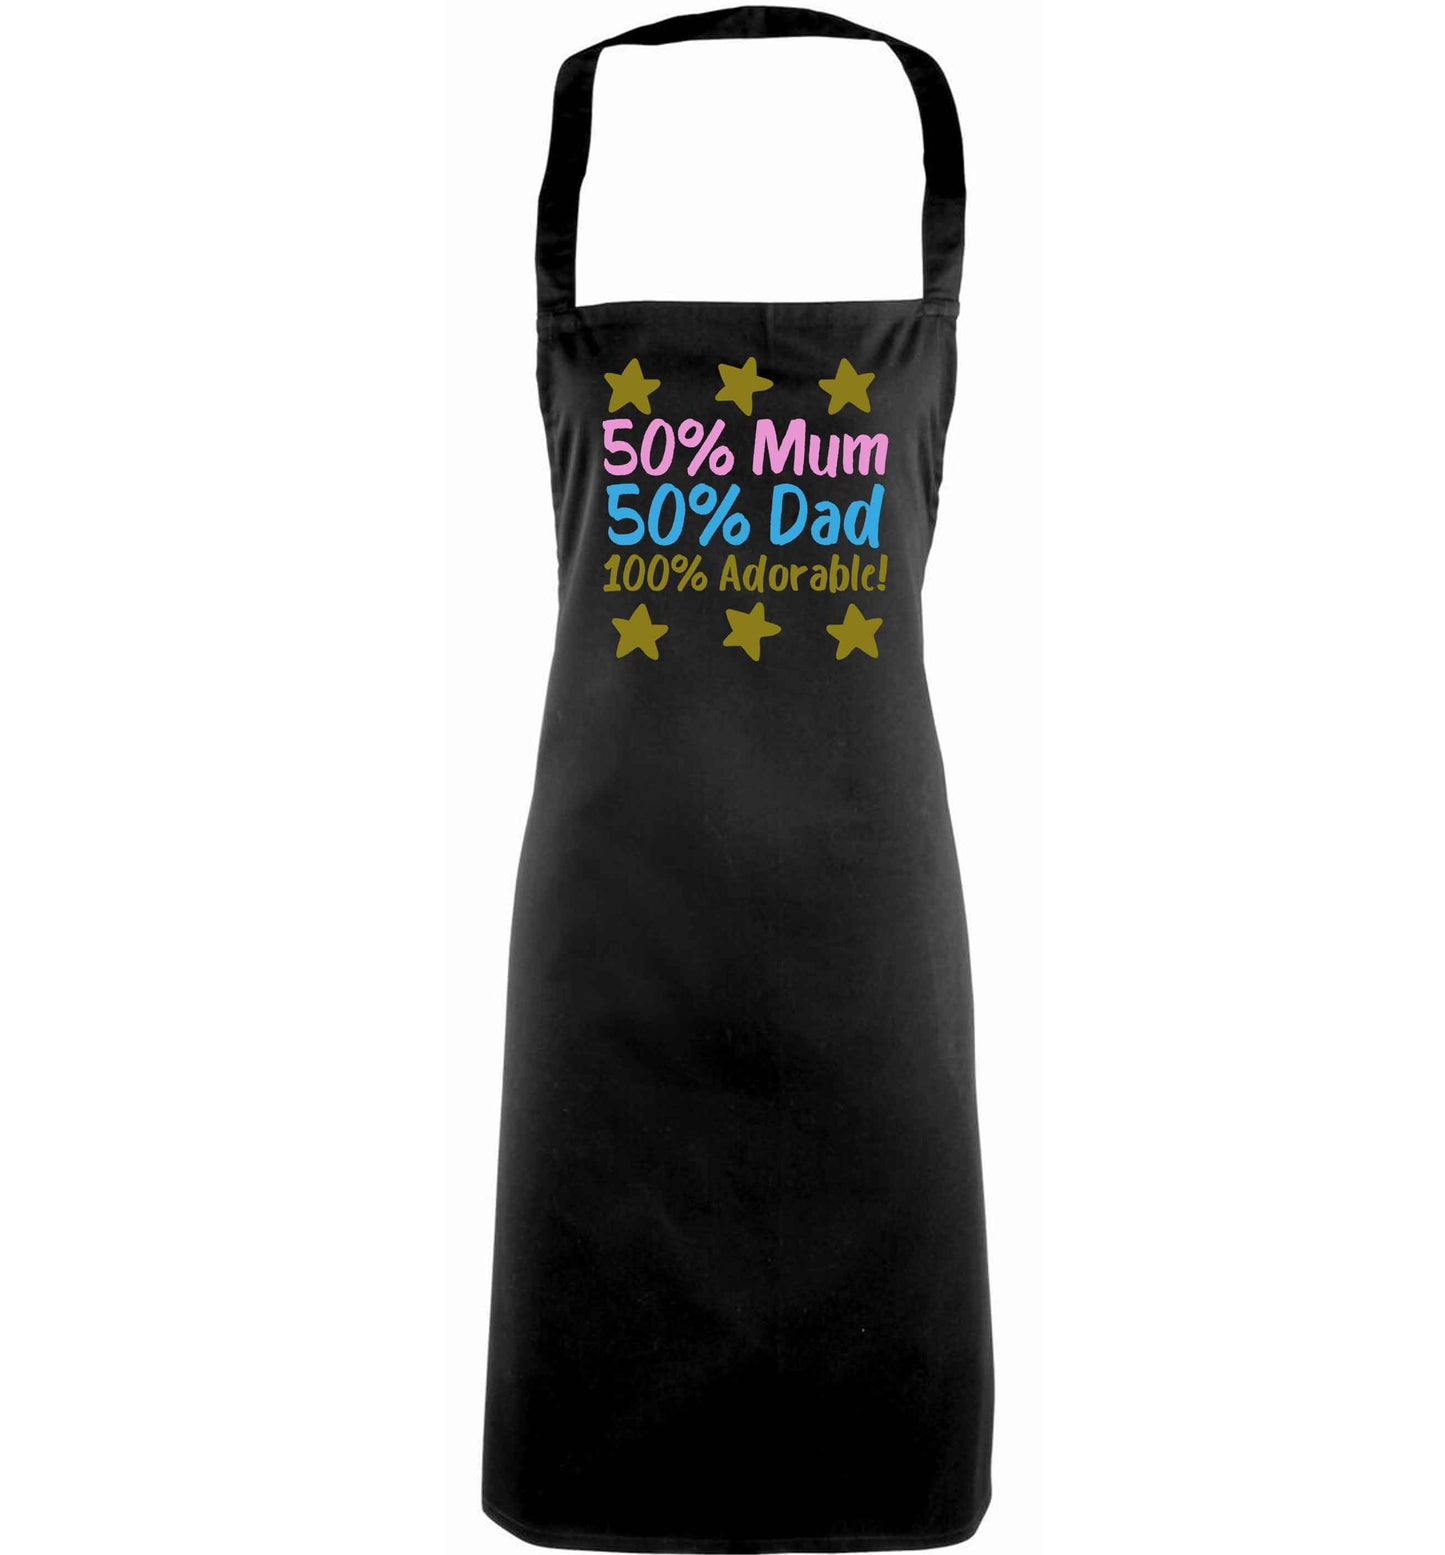 50% mum 50% dad 100% adorable adults black apron